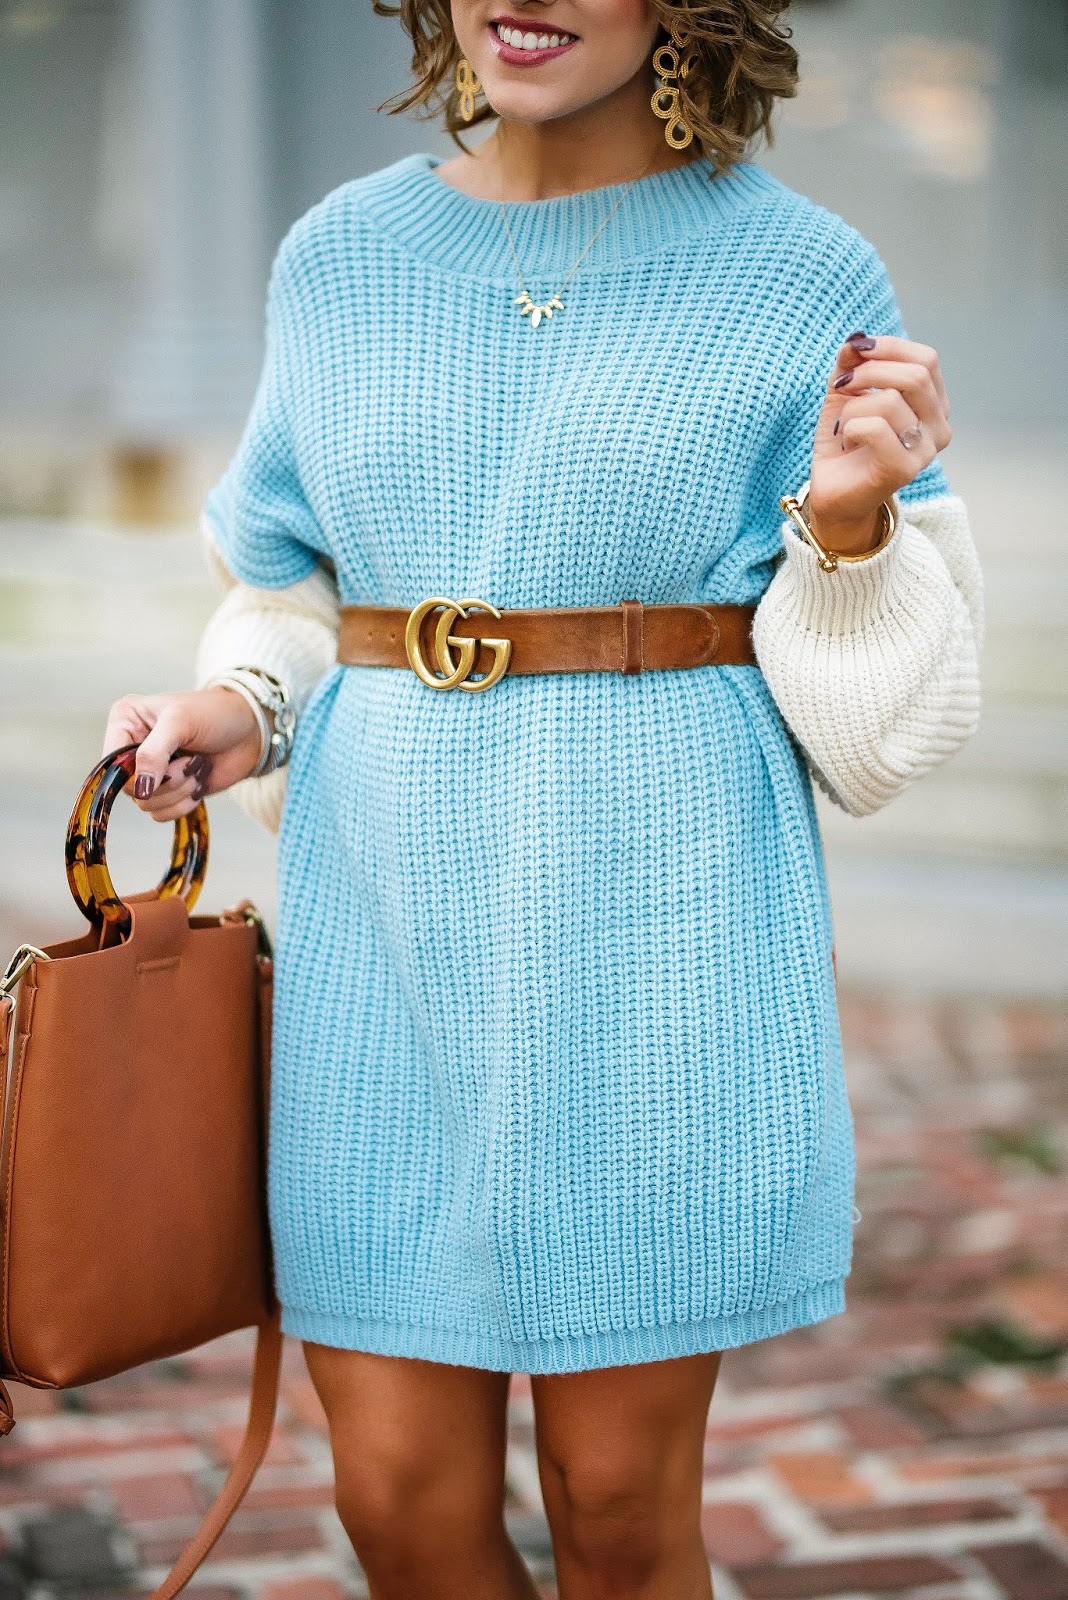 $40 Color Block Sweater Dress + Gucci Belt - Something Delightful Blog #fallfashion #fallstyle #sweaterdress